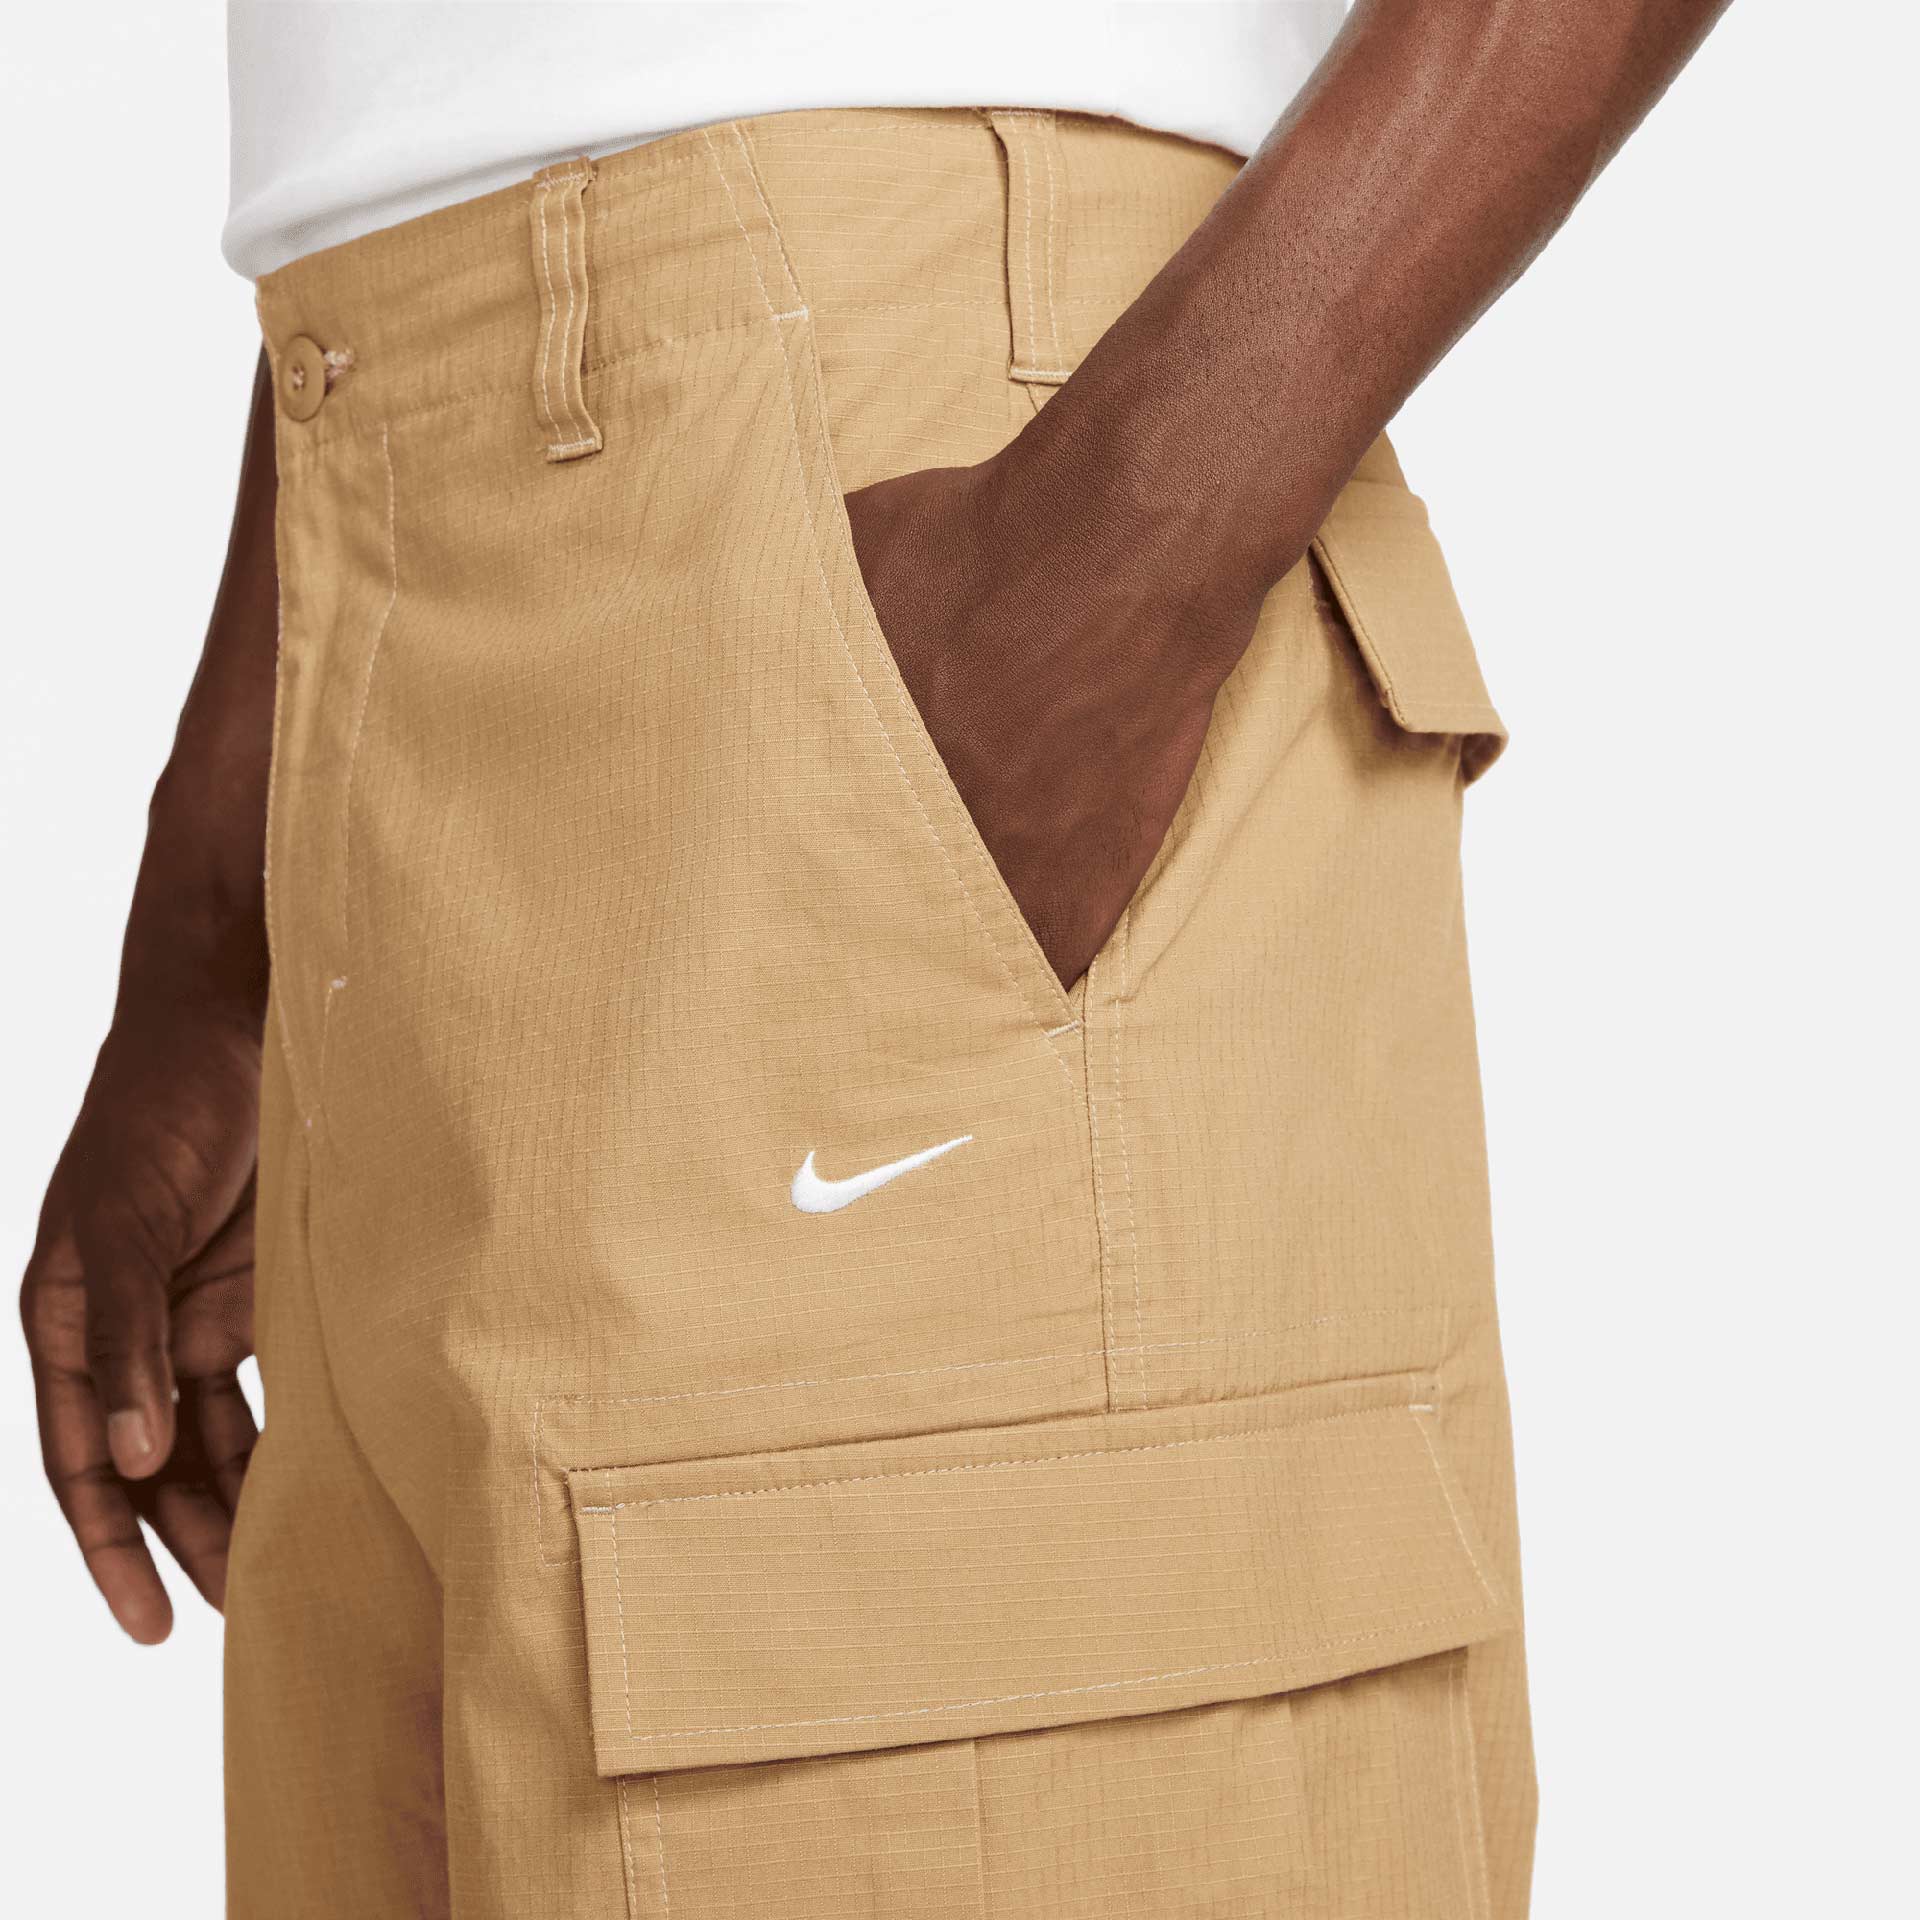 Nike SB Kearny Skate Cargo Pants Brown 03